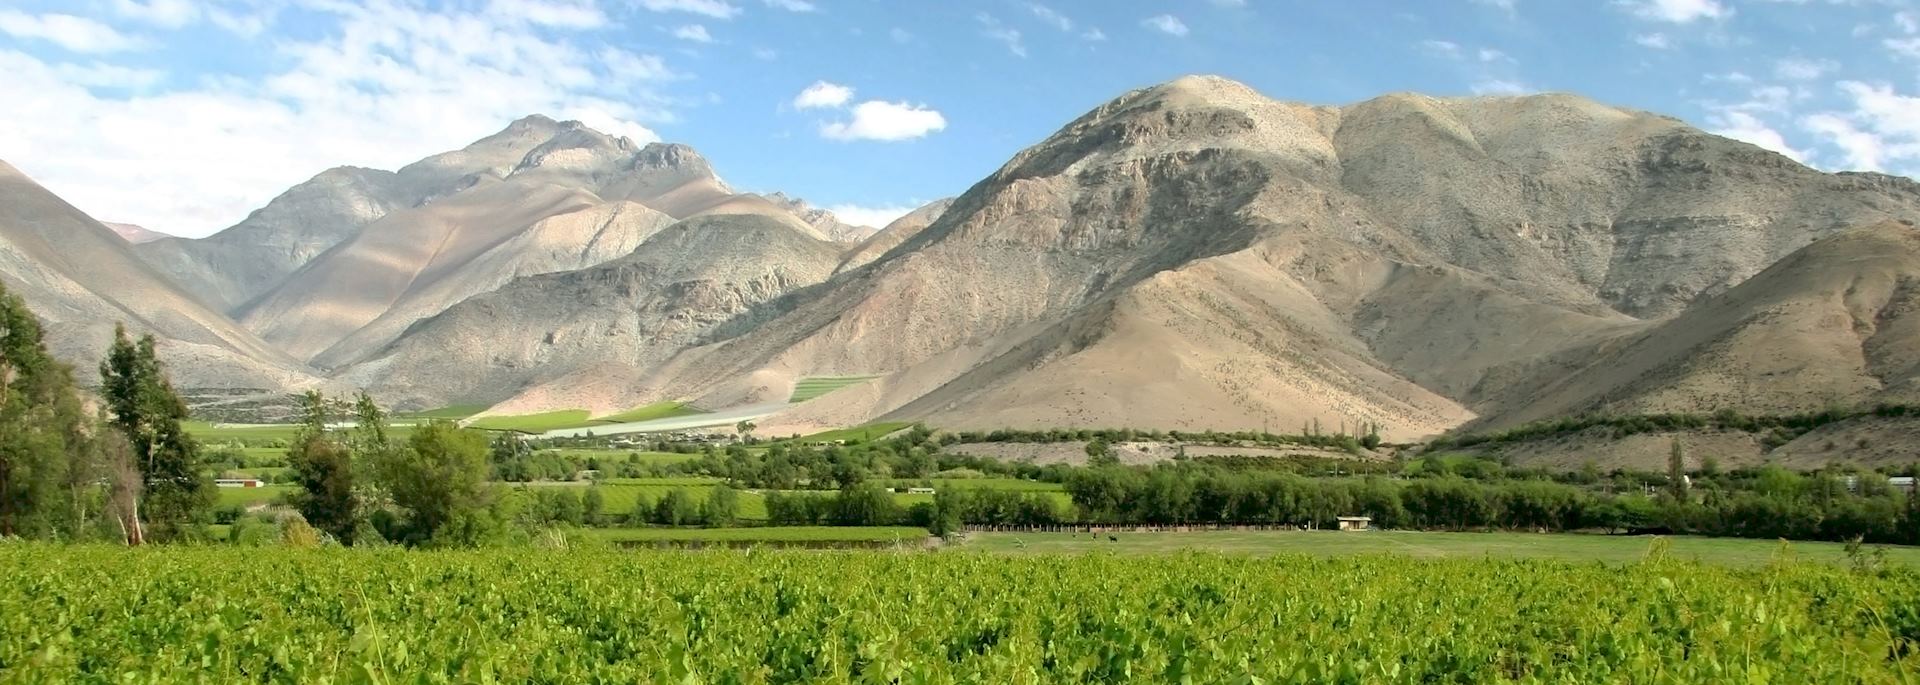 Vineyard in the Elqui Valley